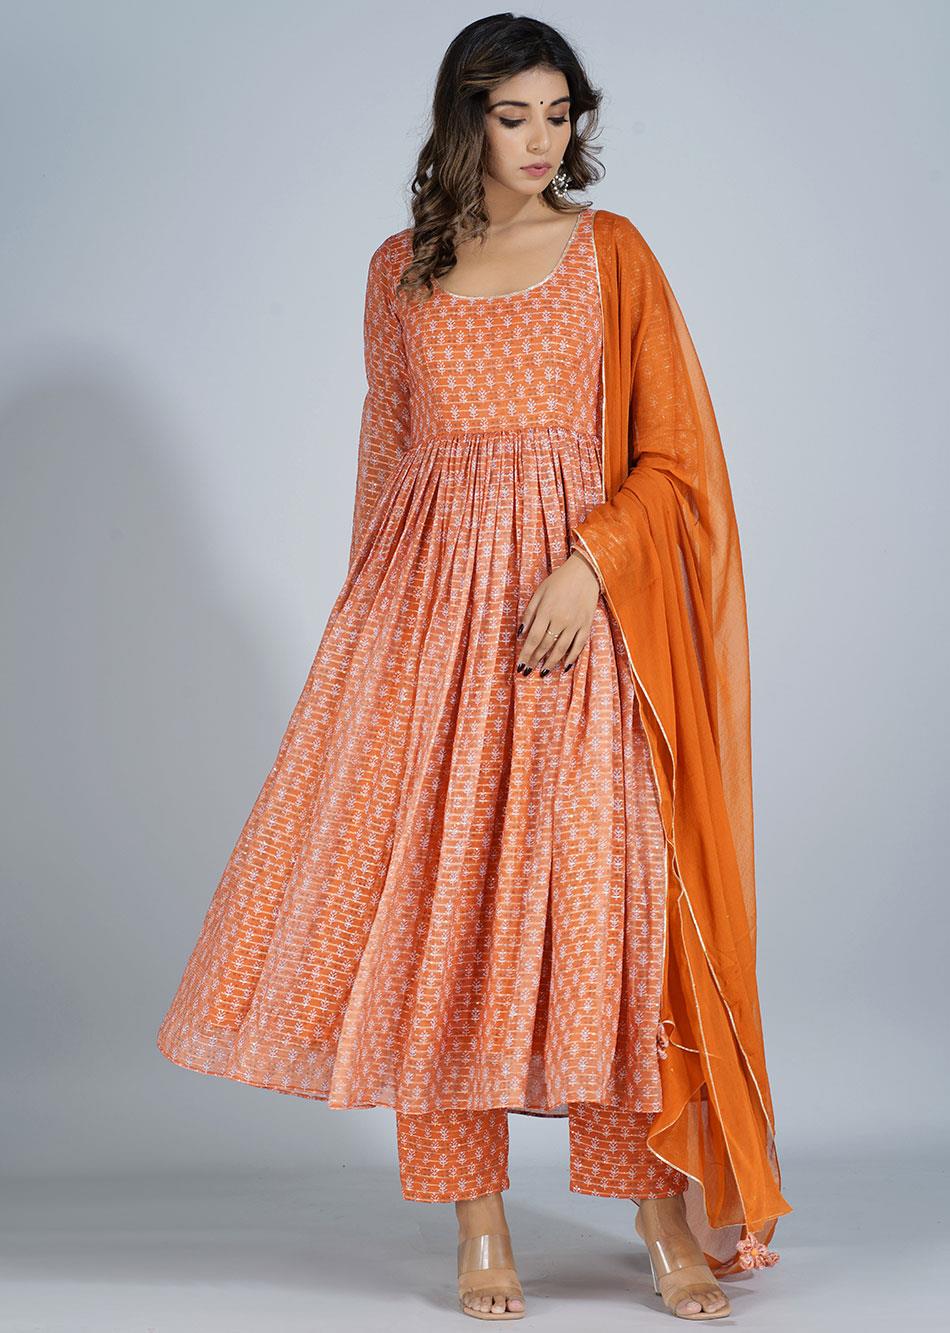 Chhapai Tangerine Gathered Anarkali (Set of 3) By Jovi Fashion